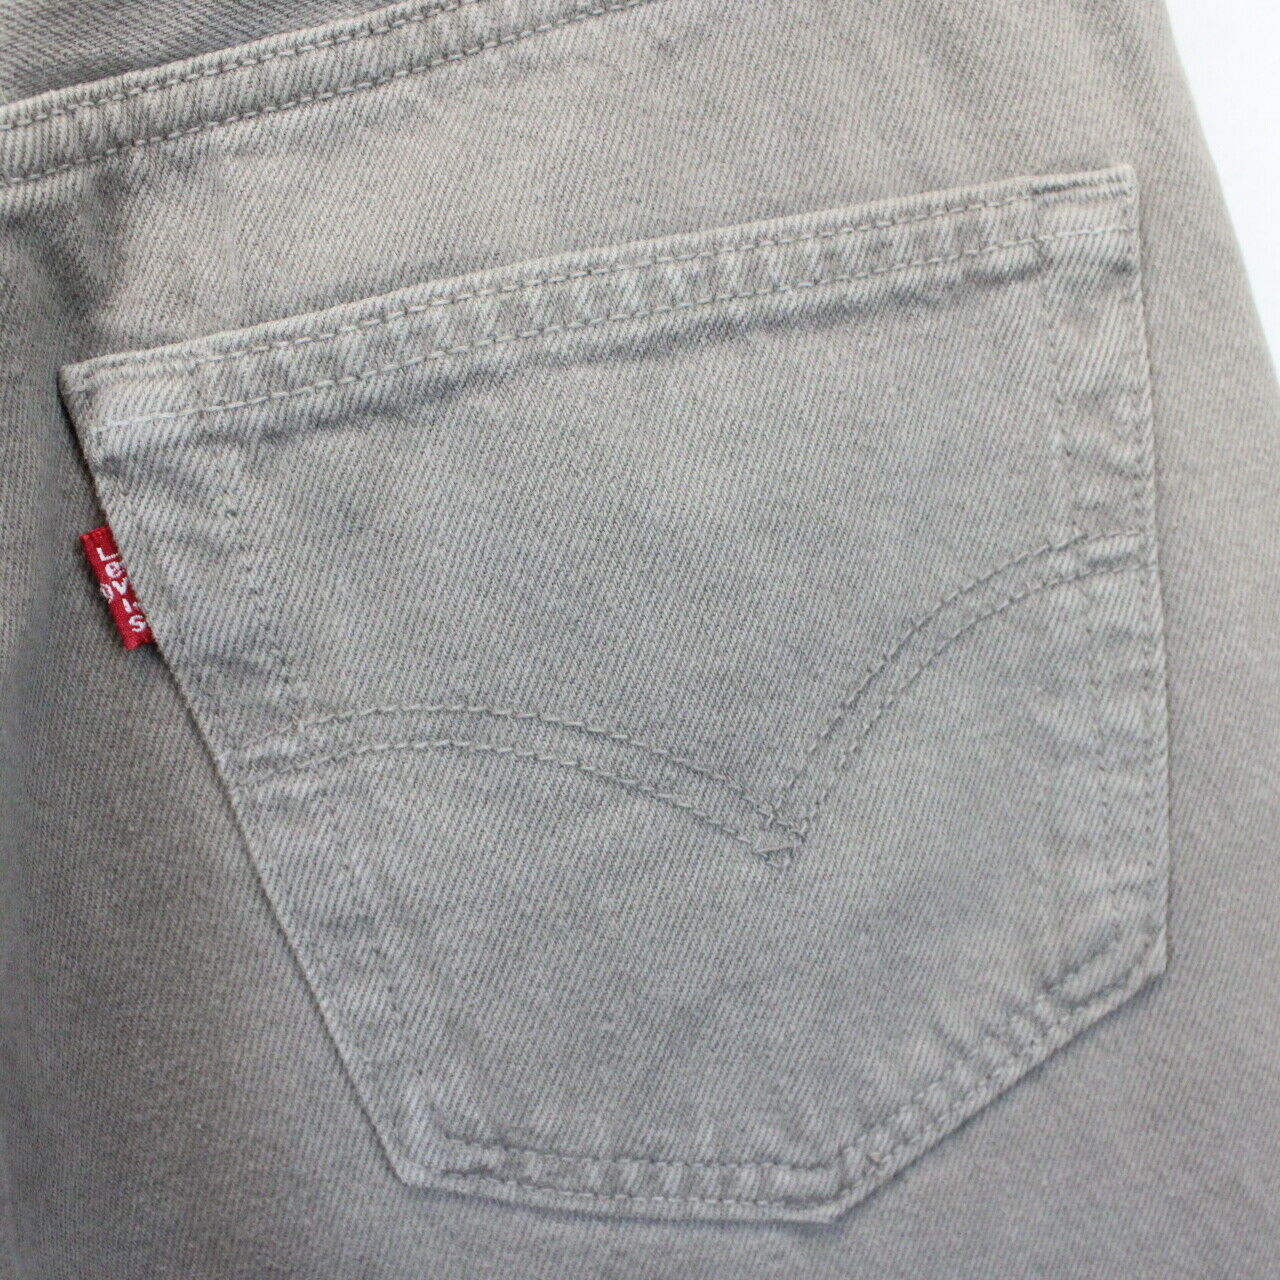 LEVIS 501 Jeans Grey | W33 L26